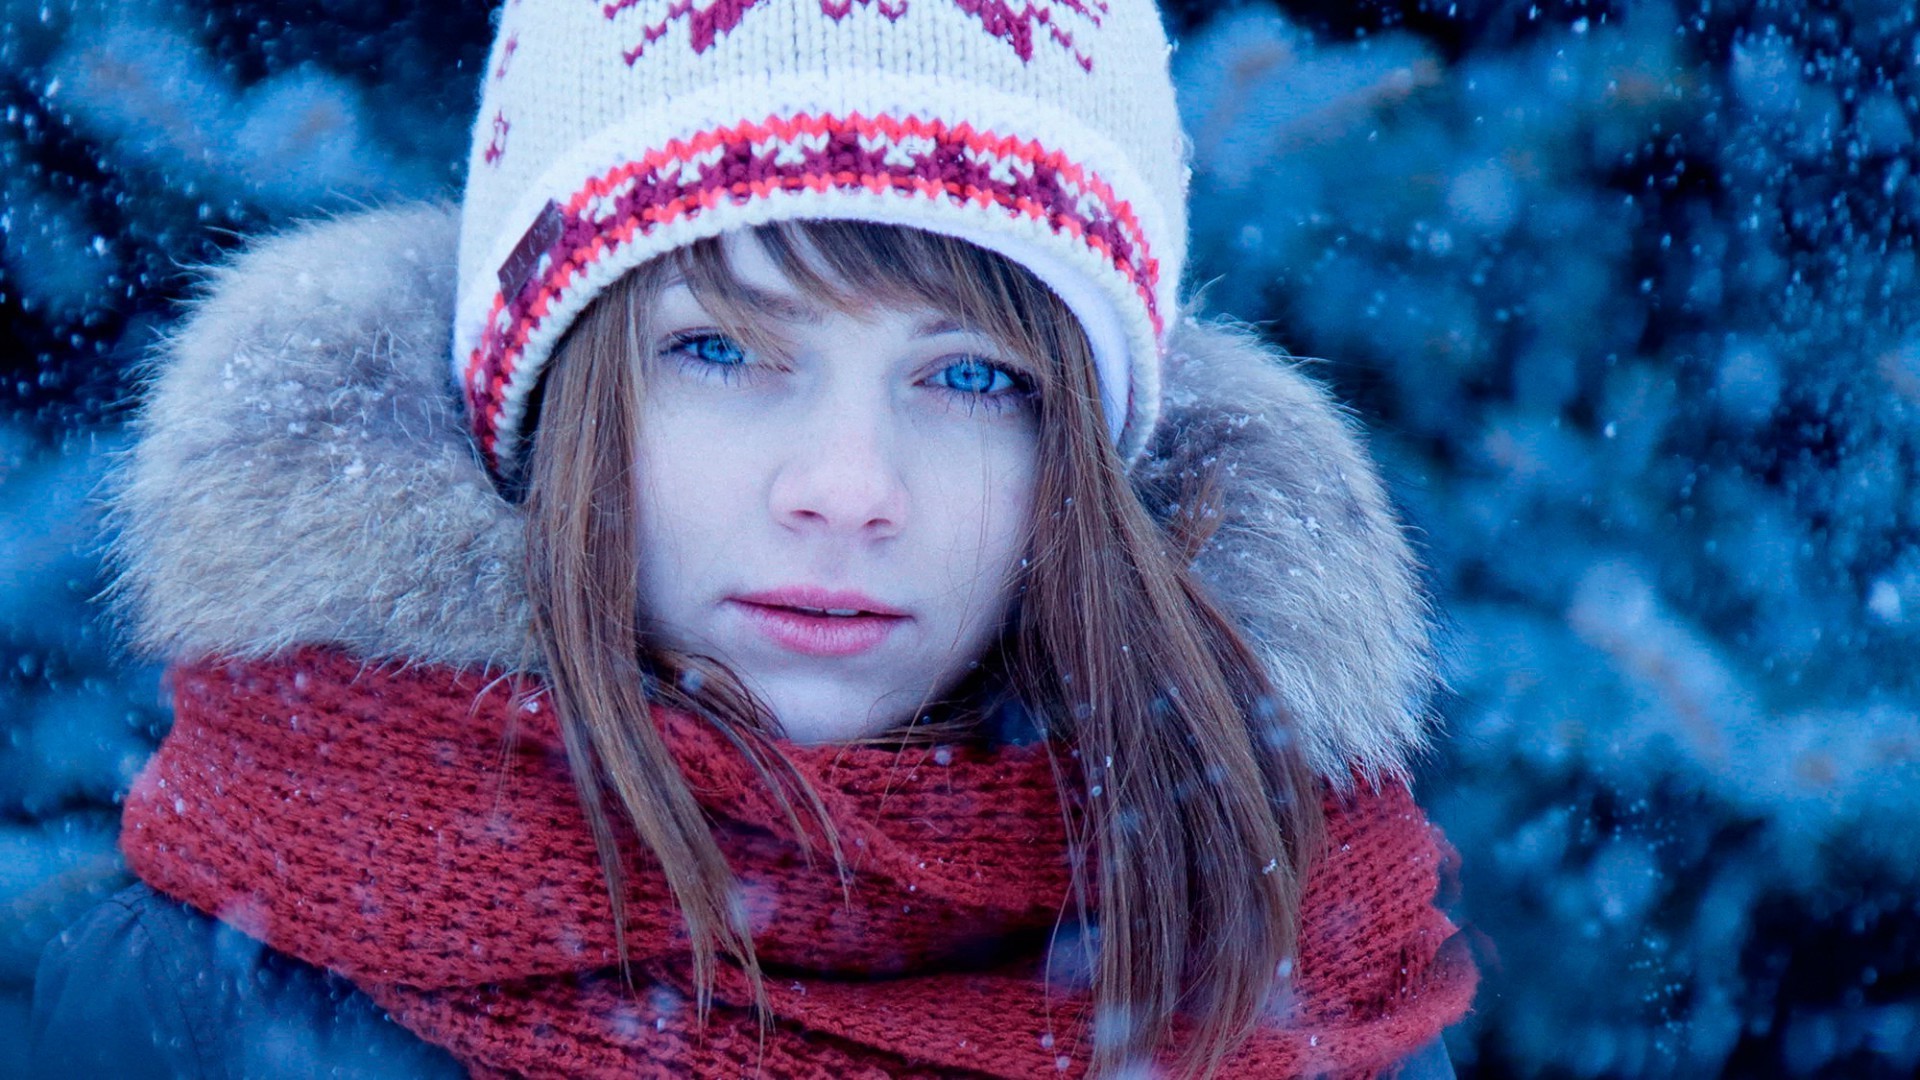 Wallpaper, women, blue eyes, red, snow, winter, color, girl, beauty, season, 1920x1080 px 1920x1080